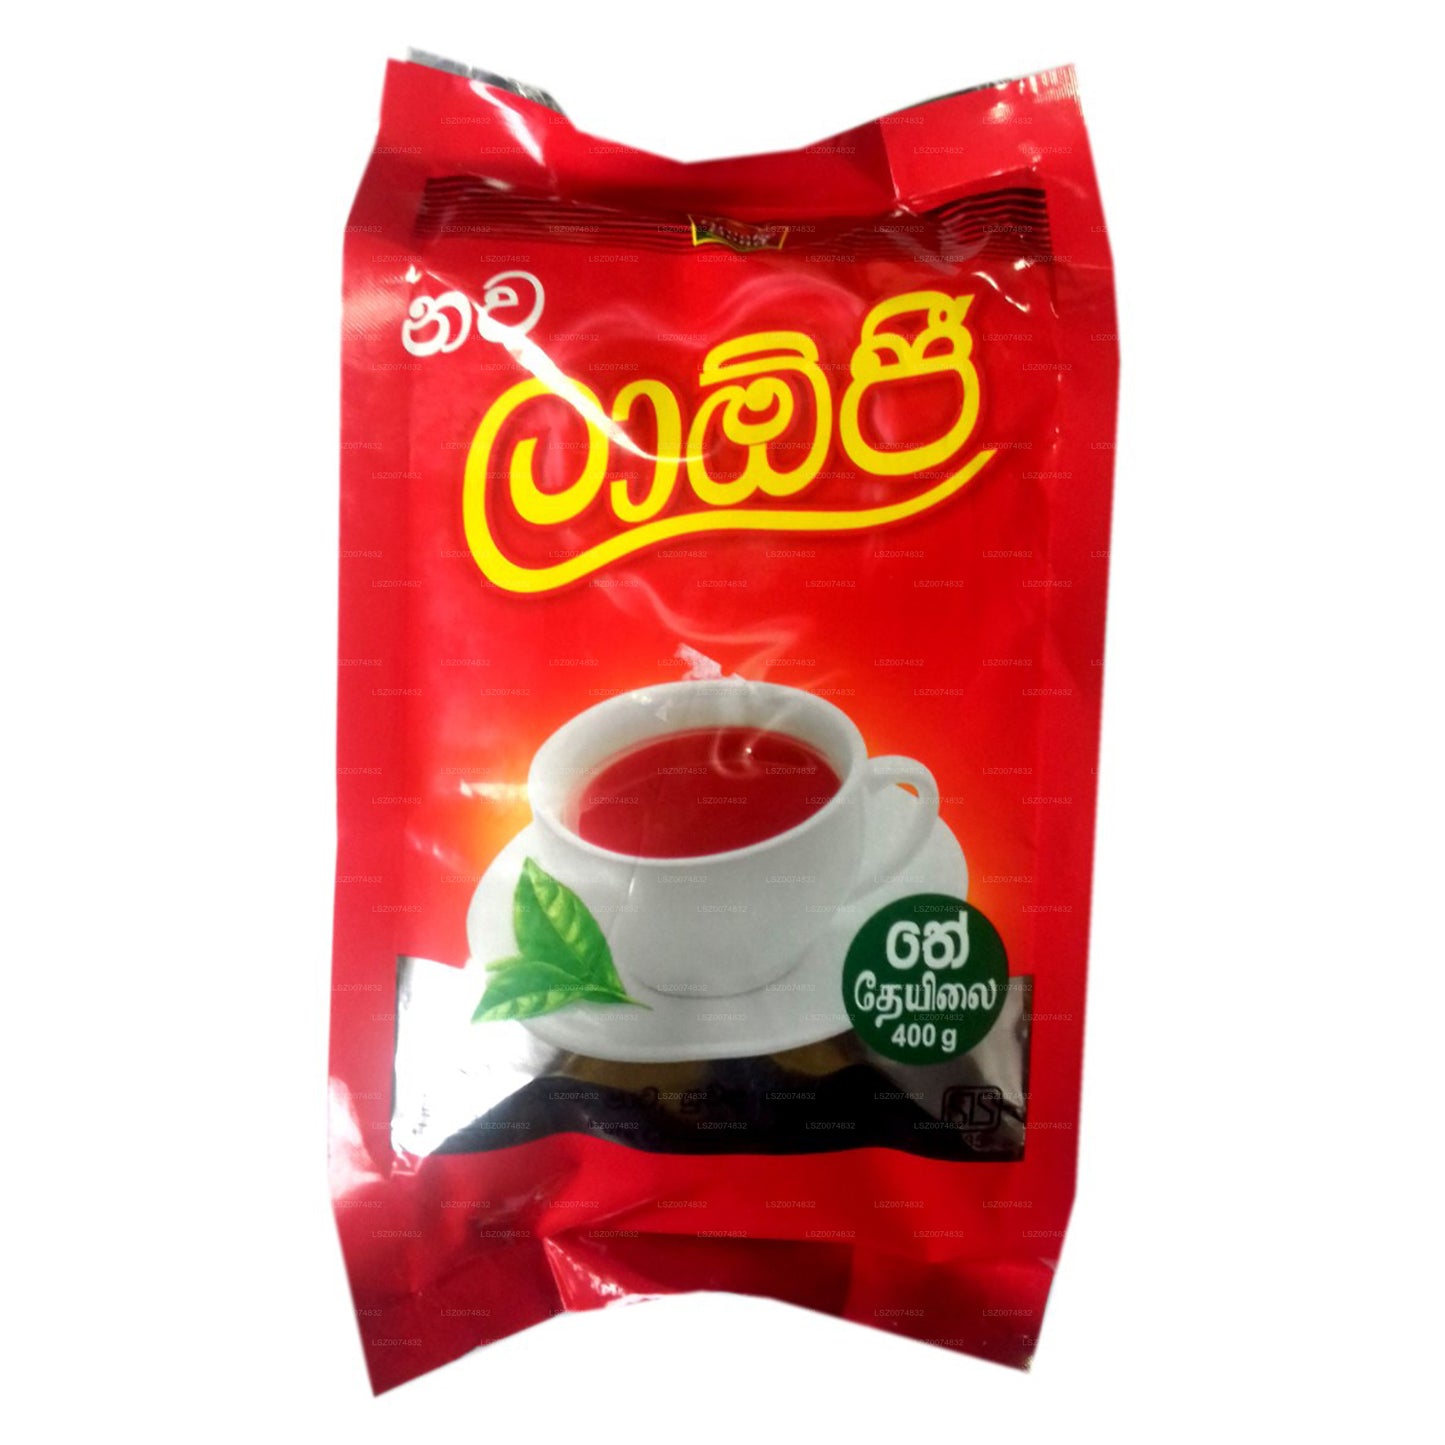 Laojee Pure Ceylon czarna torebka na herbatę (400g)